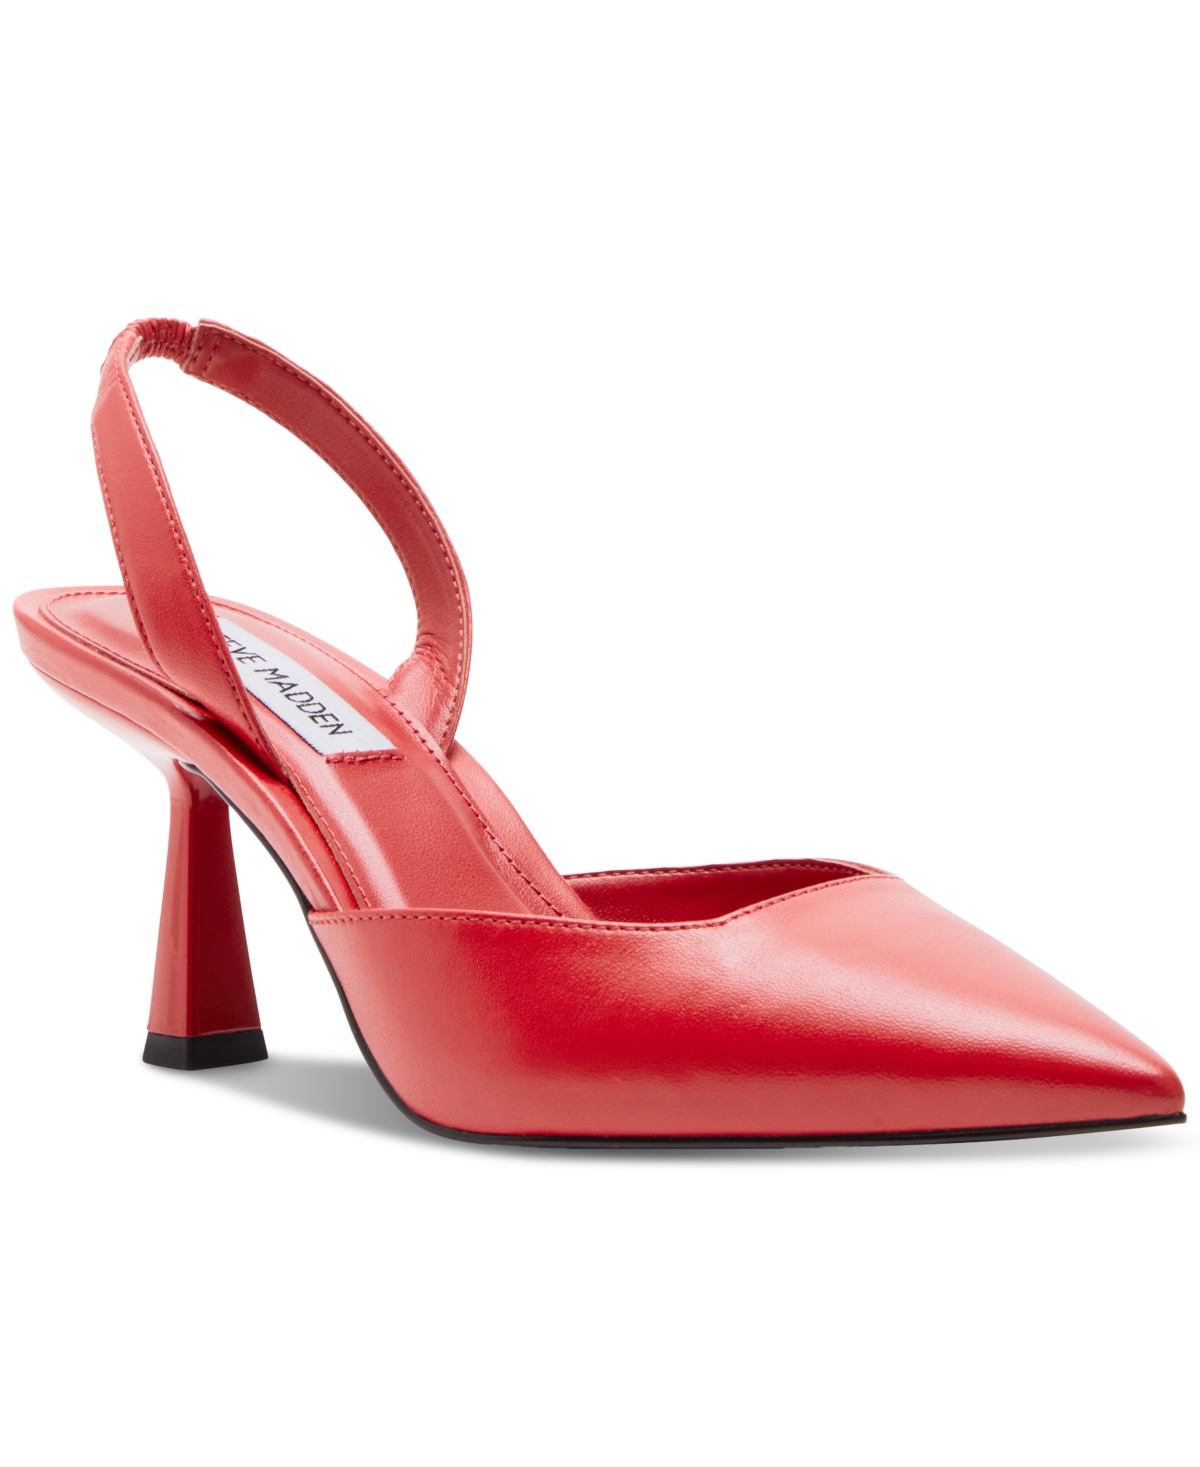 Women's Finlee Pointed-Toe Kitten-Heel Slingback Pumps - Red Leather